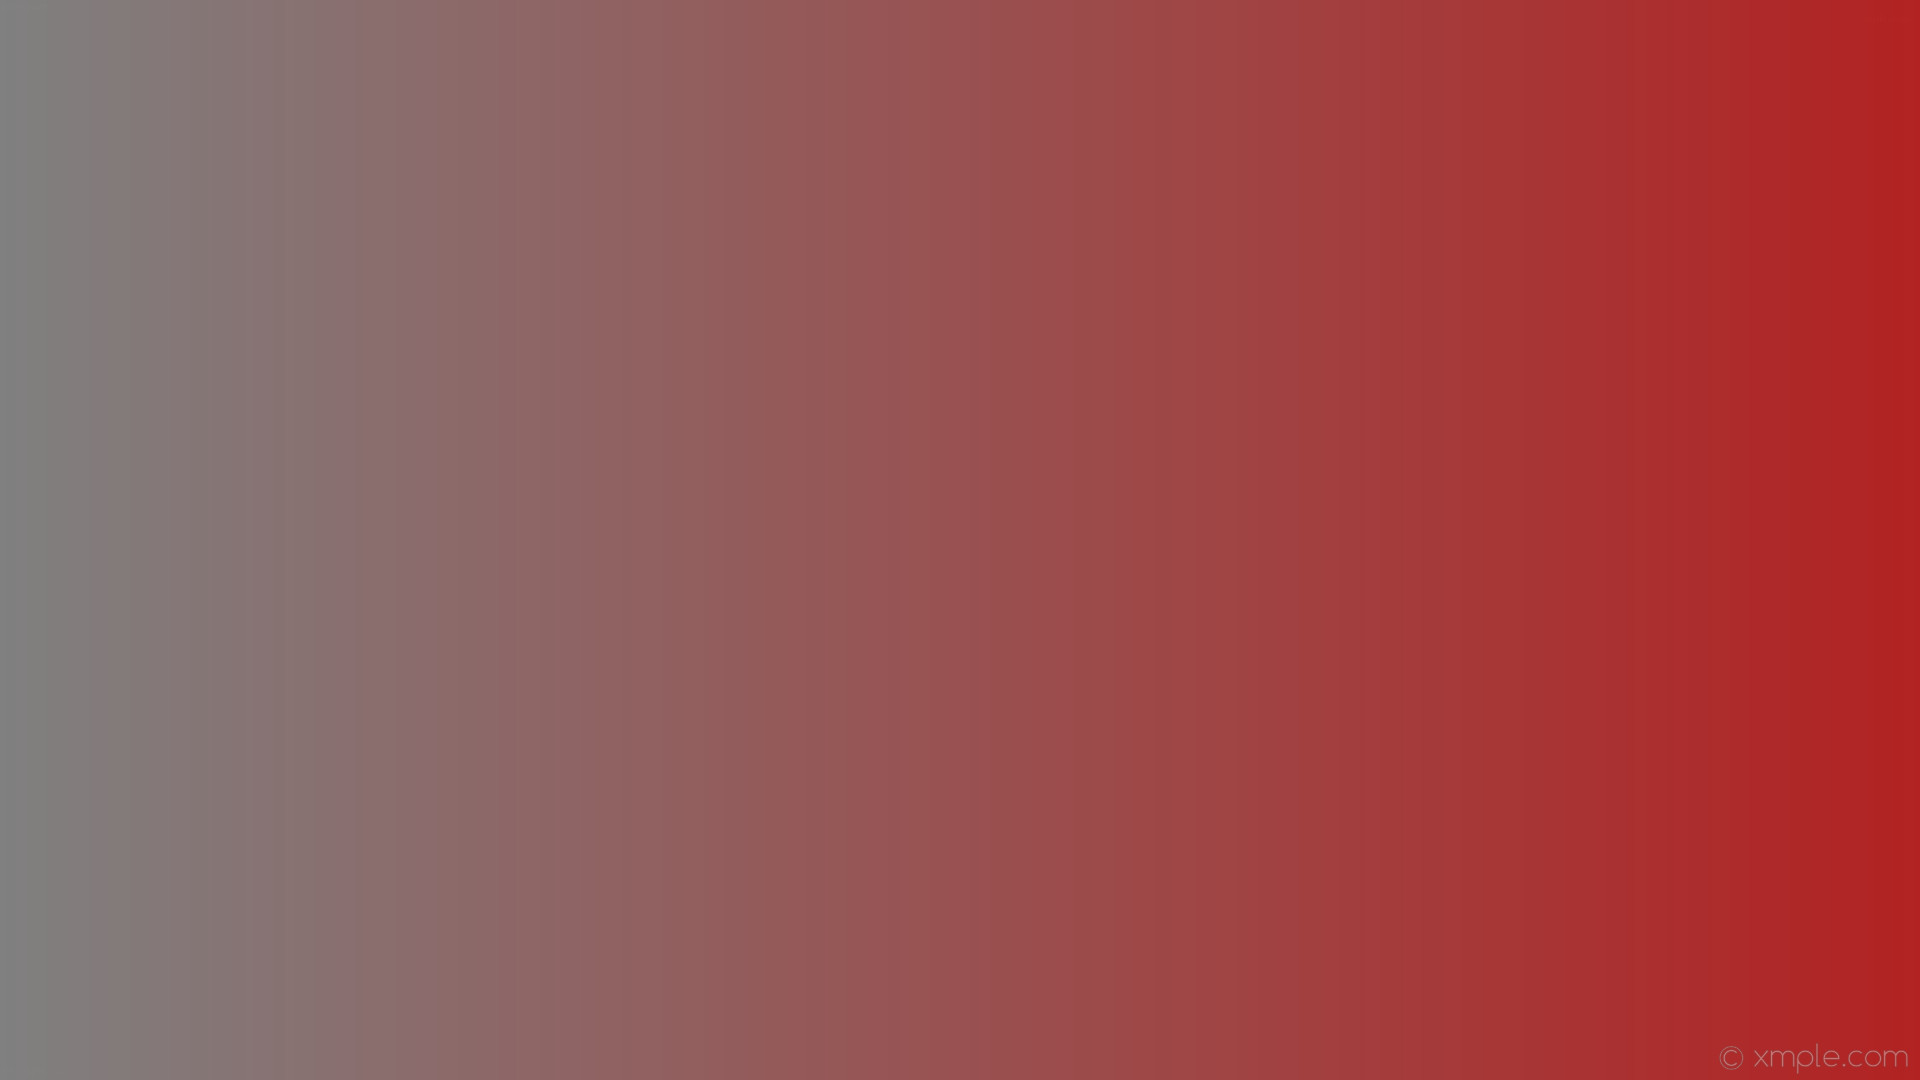 Wallpaper gradient grey red linear gray fire brick #b22222 180